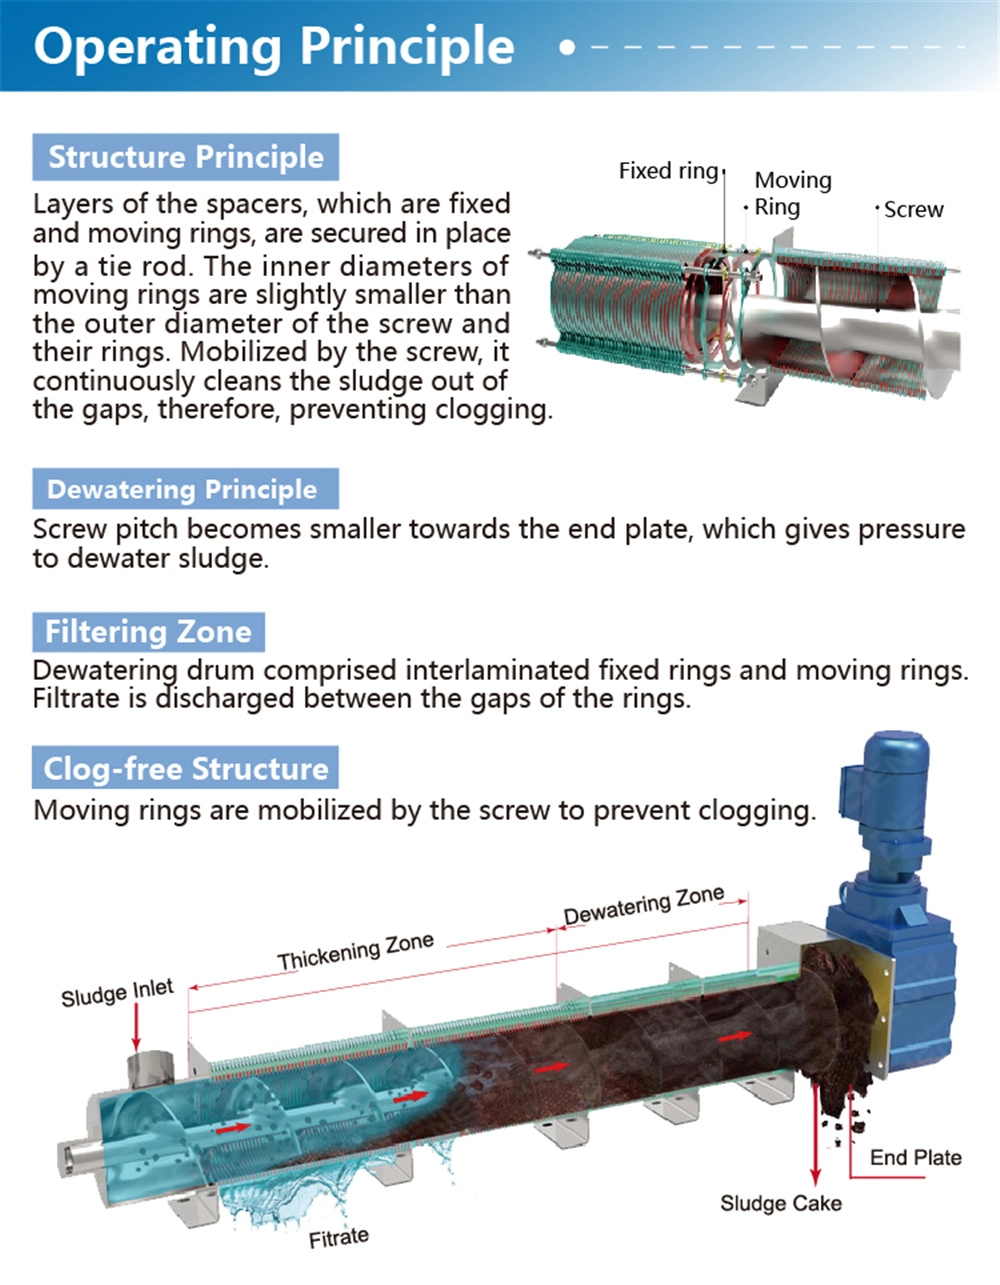 Screw Press Dewatering Machine Sludge Dewatering Equipment Sewage Treatment Wastewater Treatment